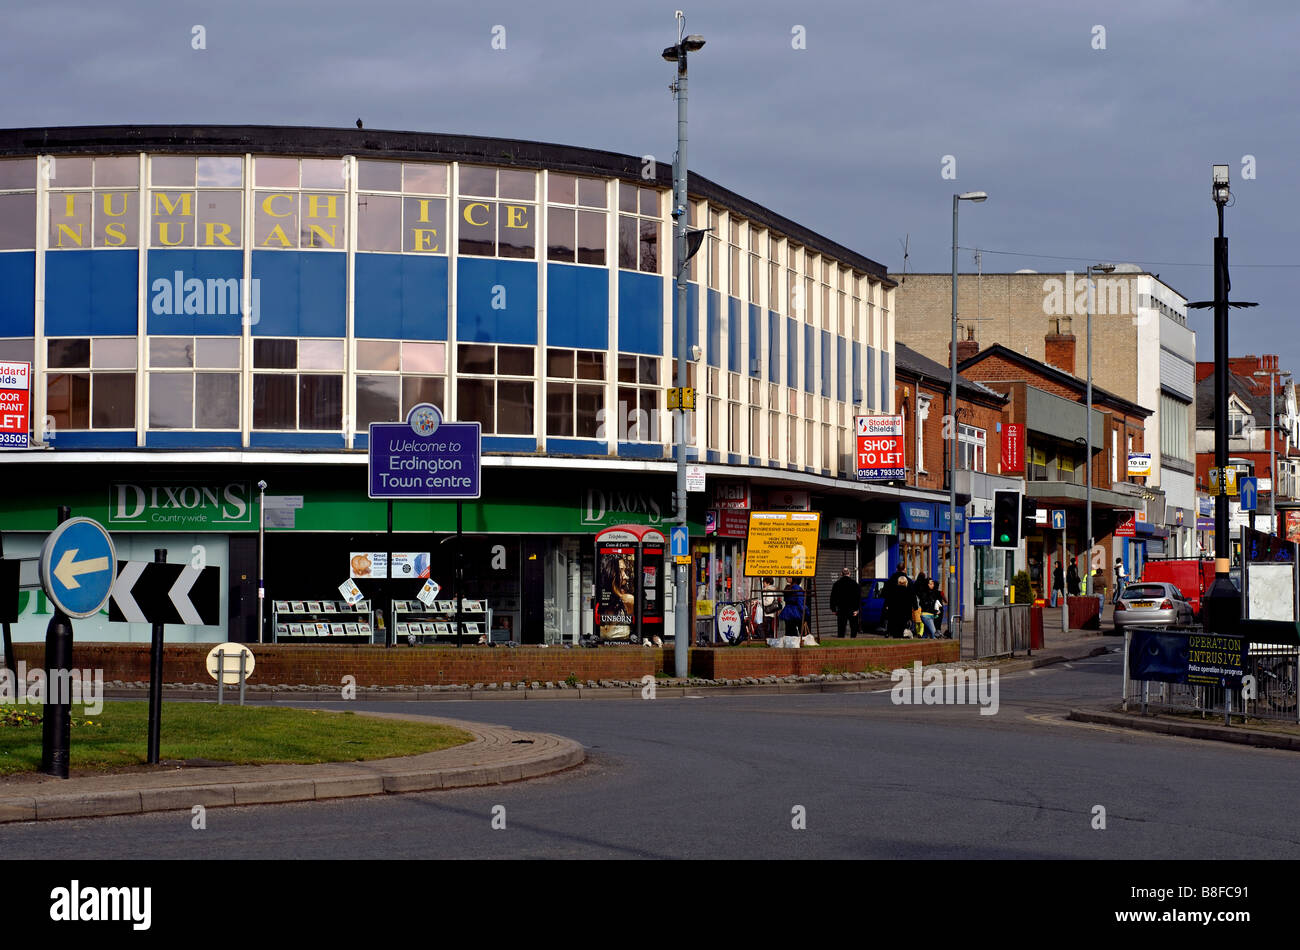 Erdington town centre, Birmingham, England, UK Stock Photo